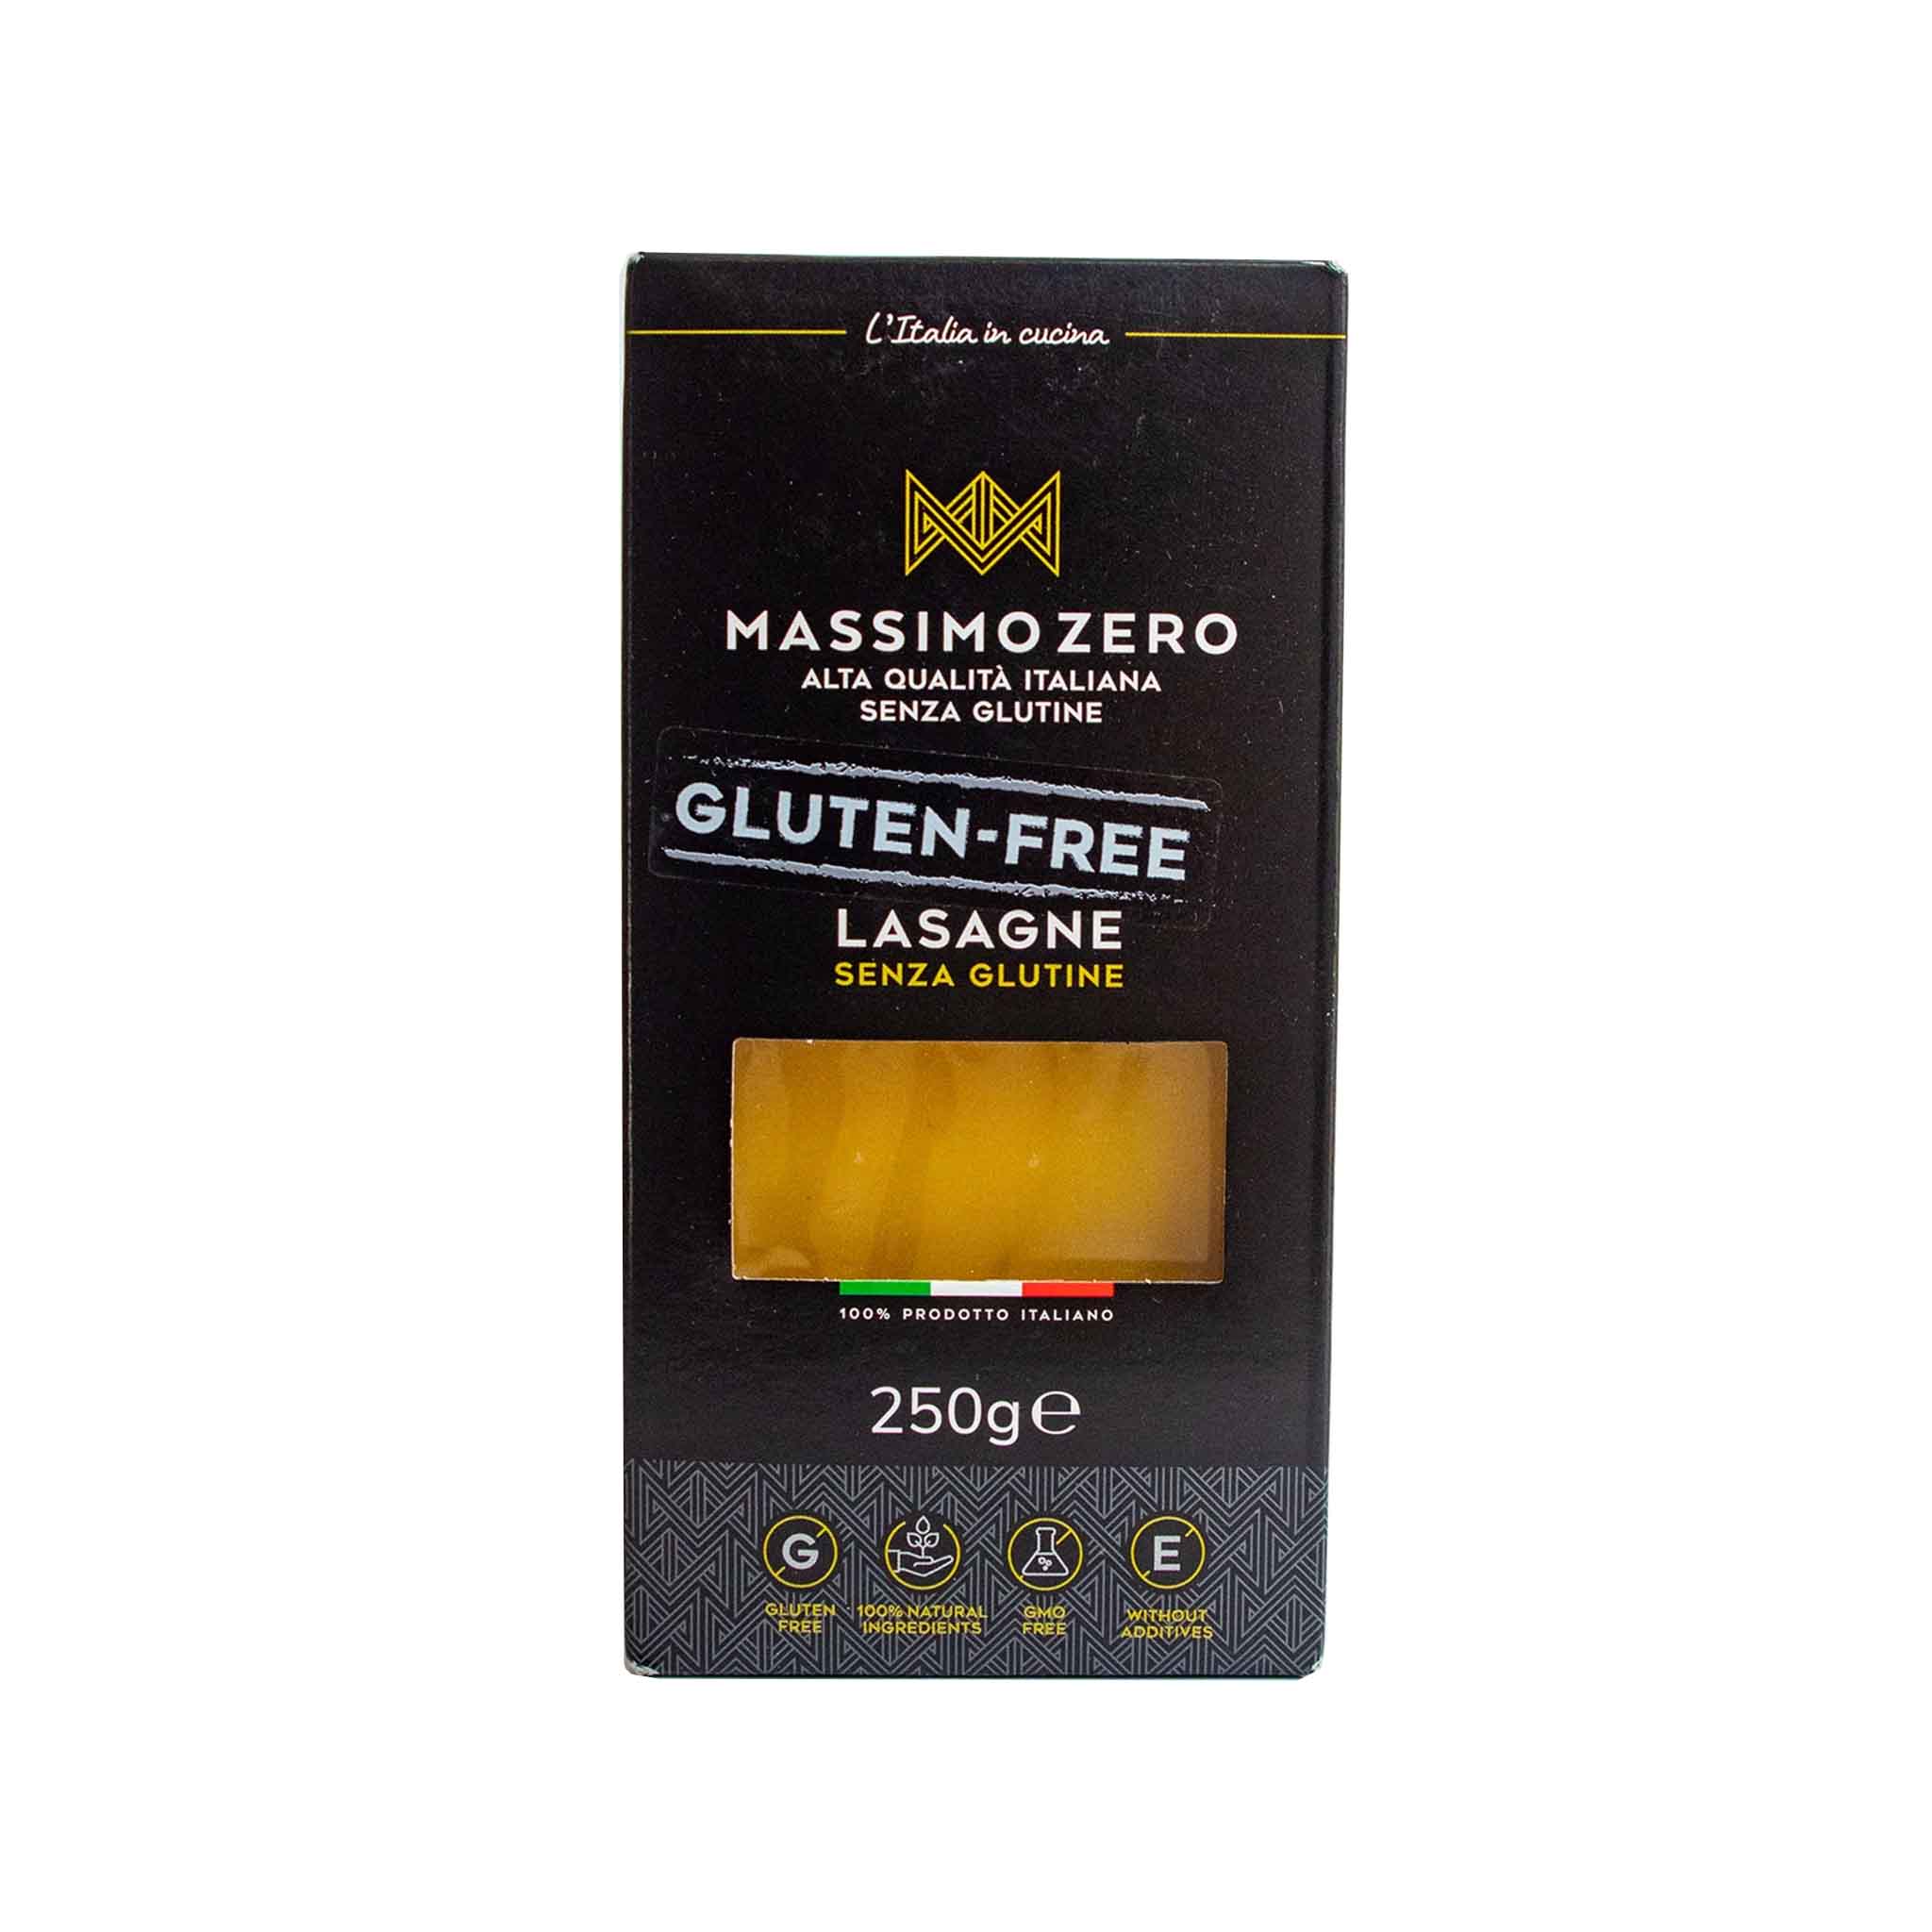 MASSIMO ZERO GLUTEN-FREE LASAGNA 250g